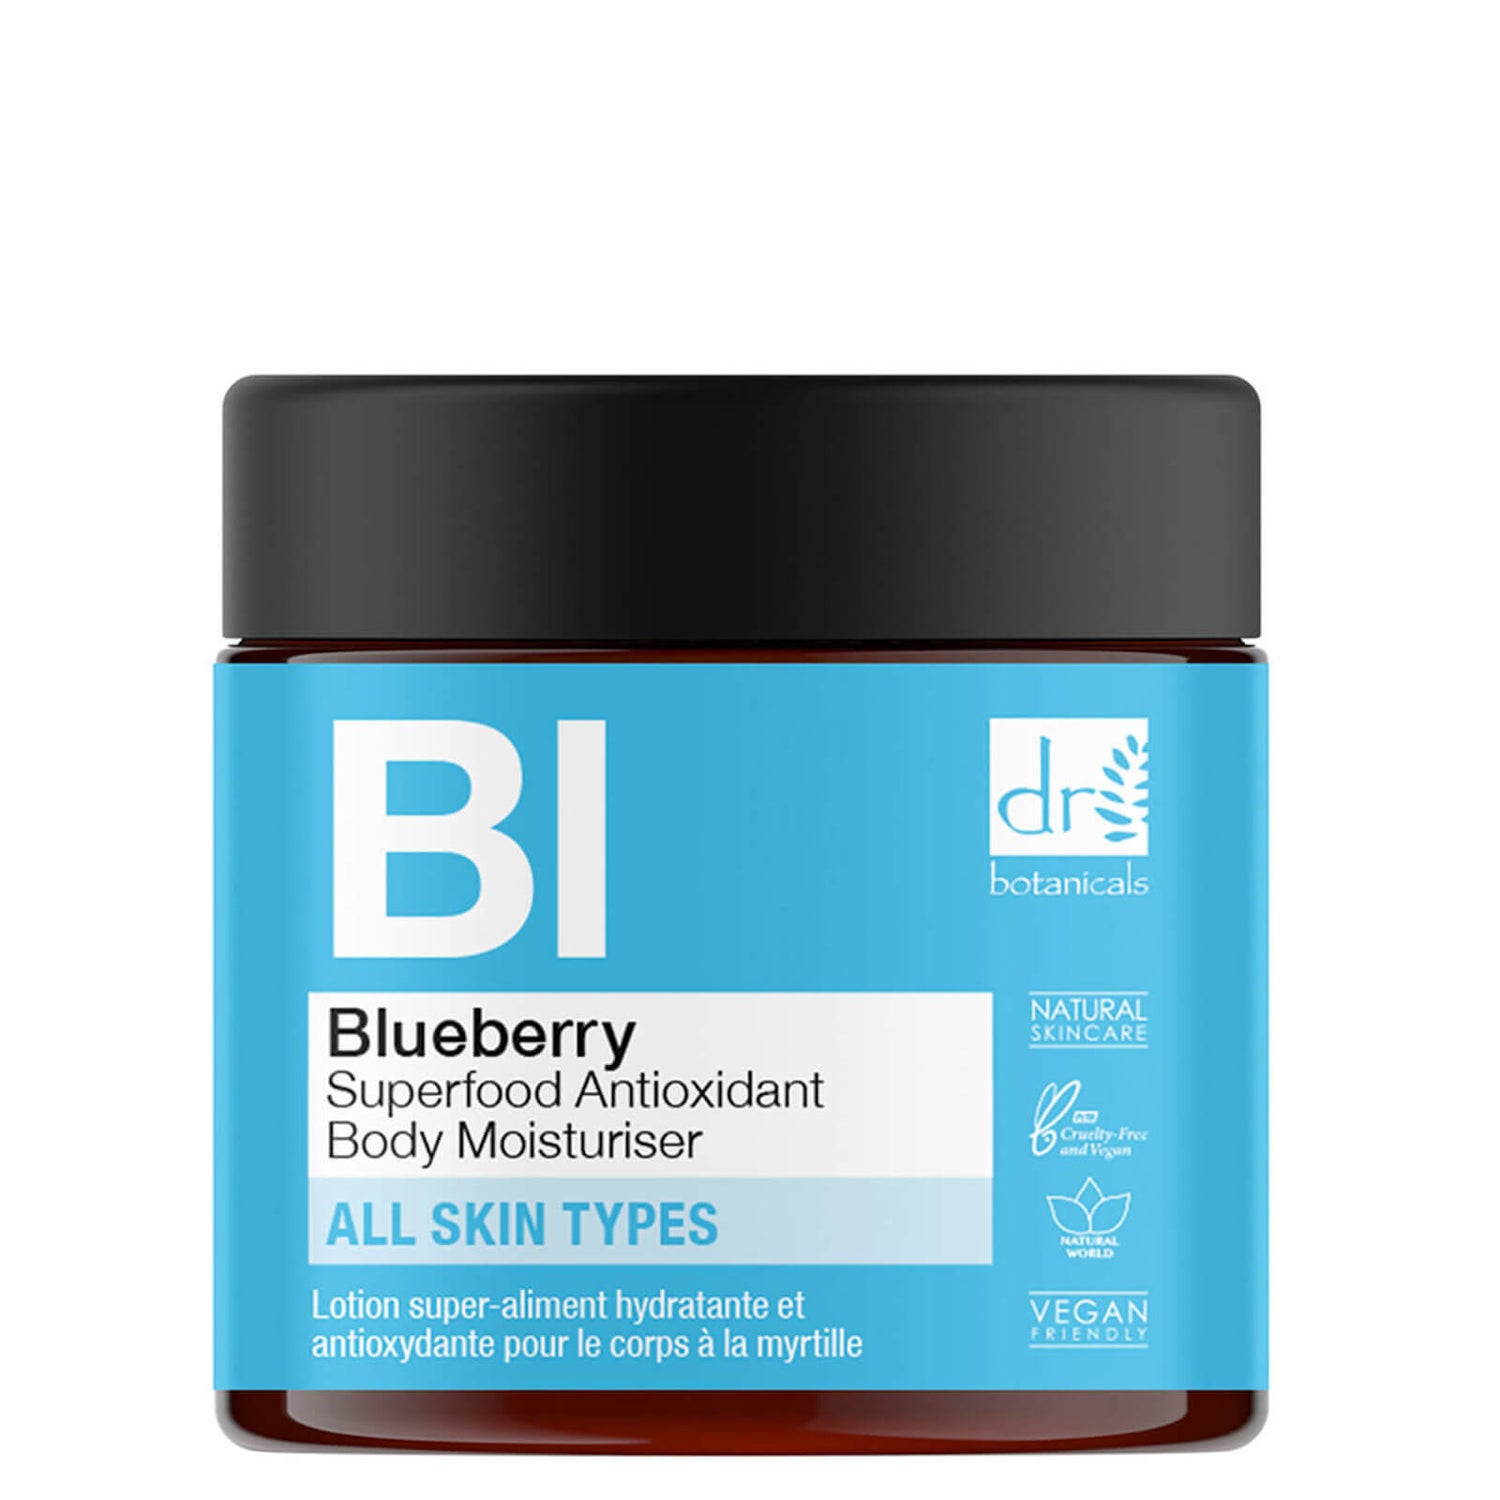 Dr Botanicals 蓝莓超级食物抗氧化身体润肤霜 60ml